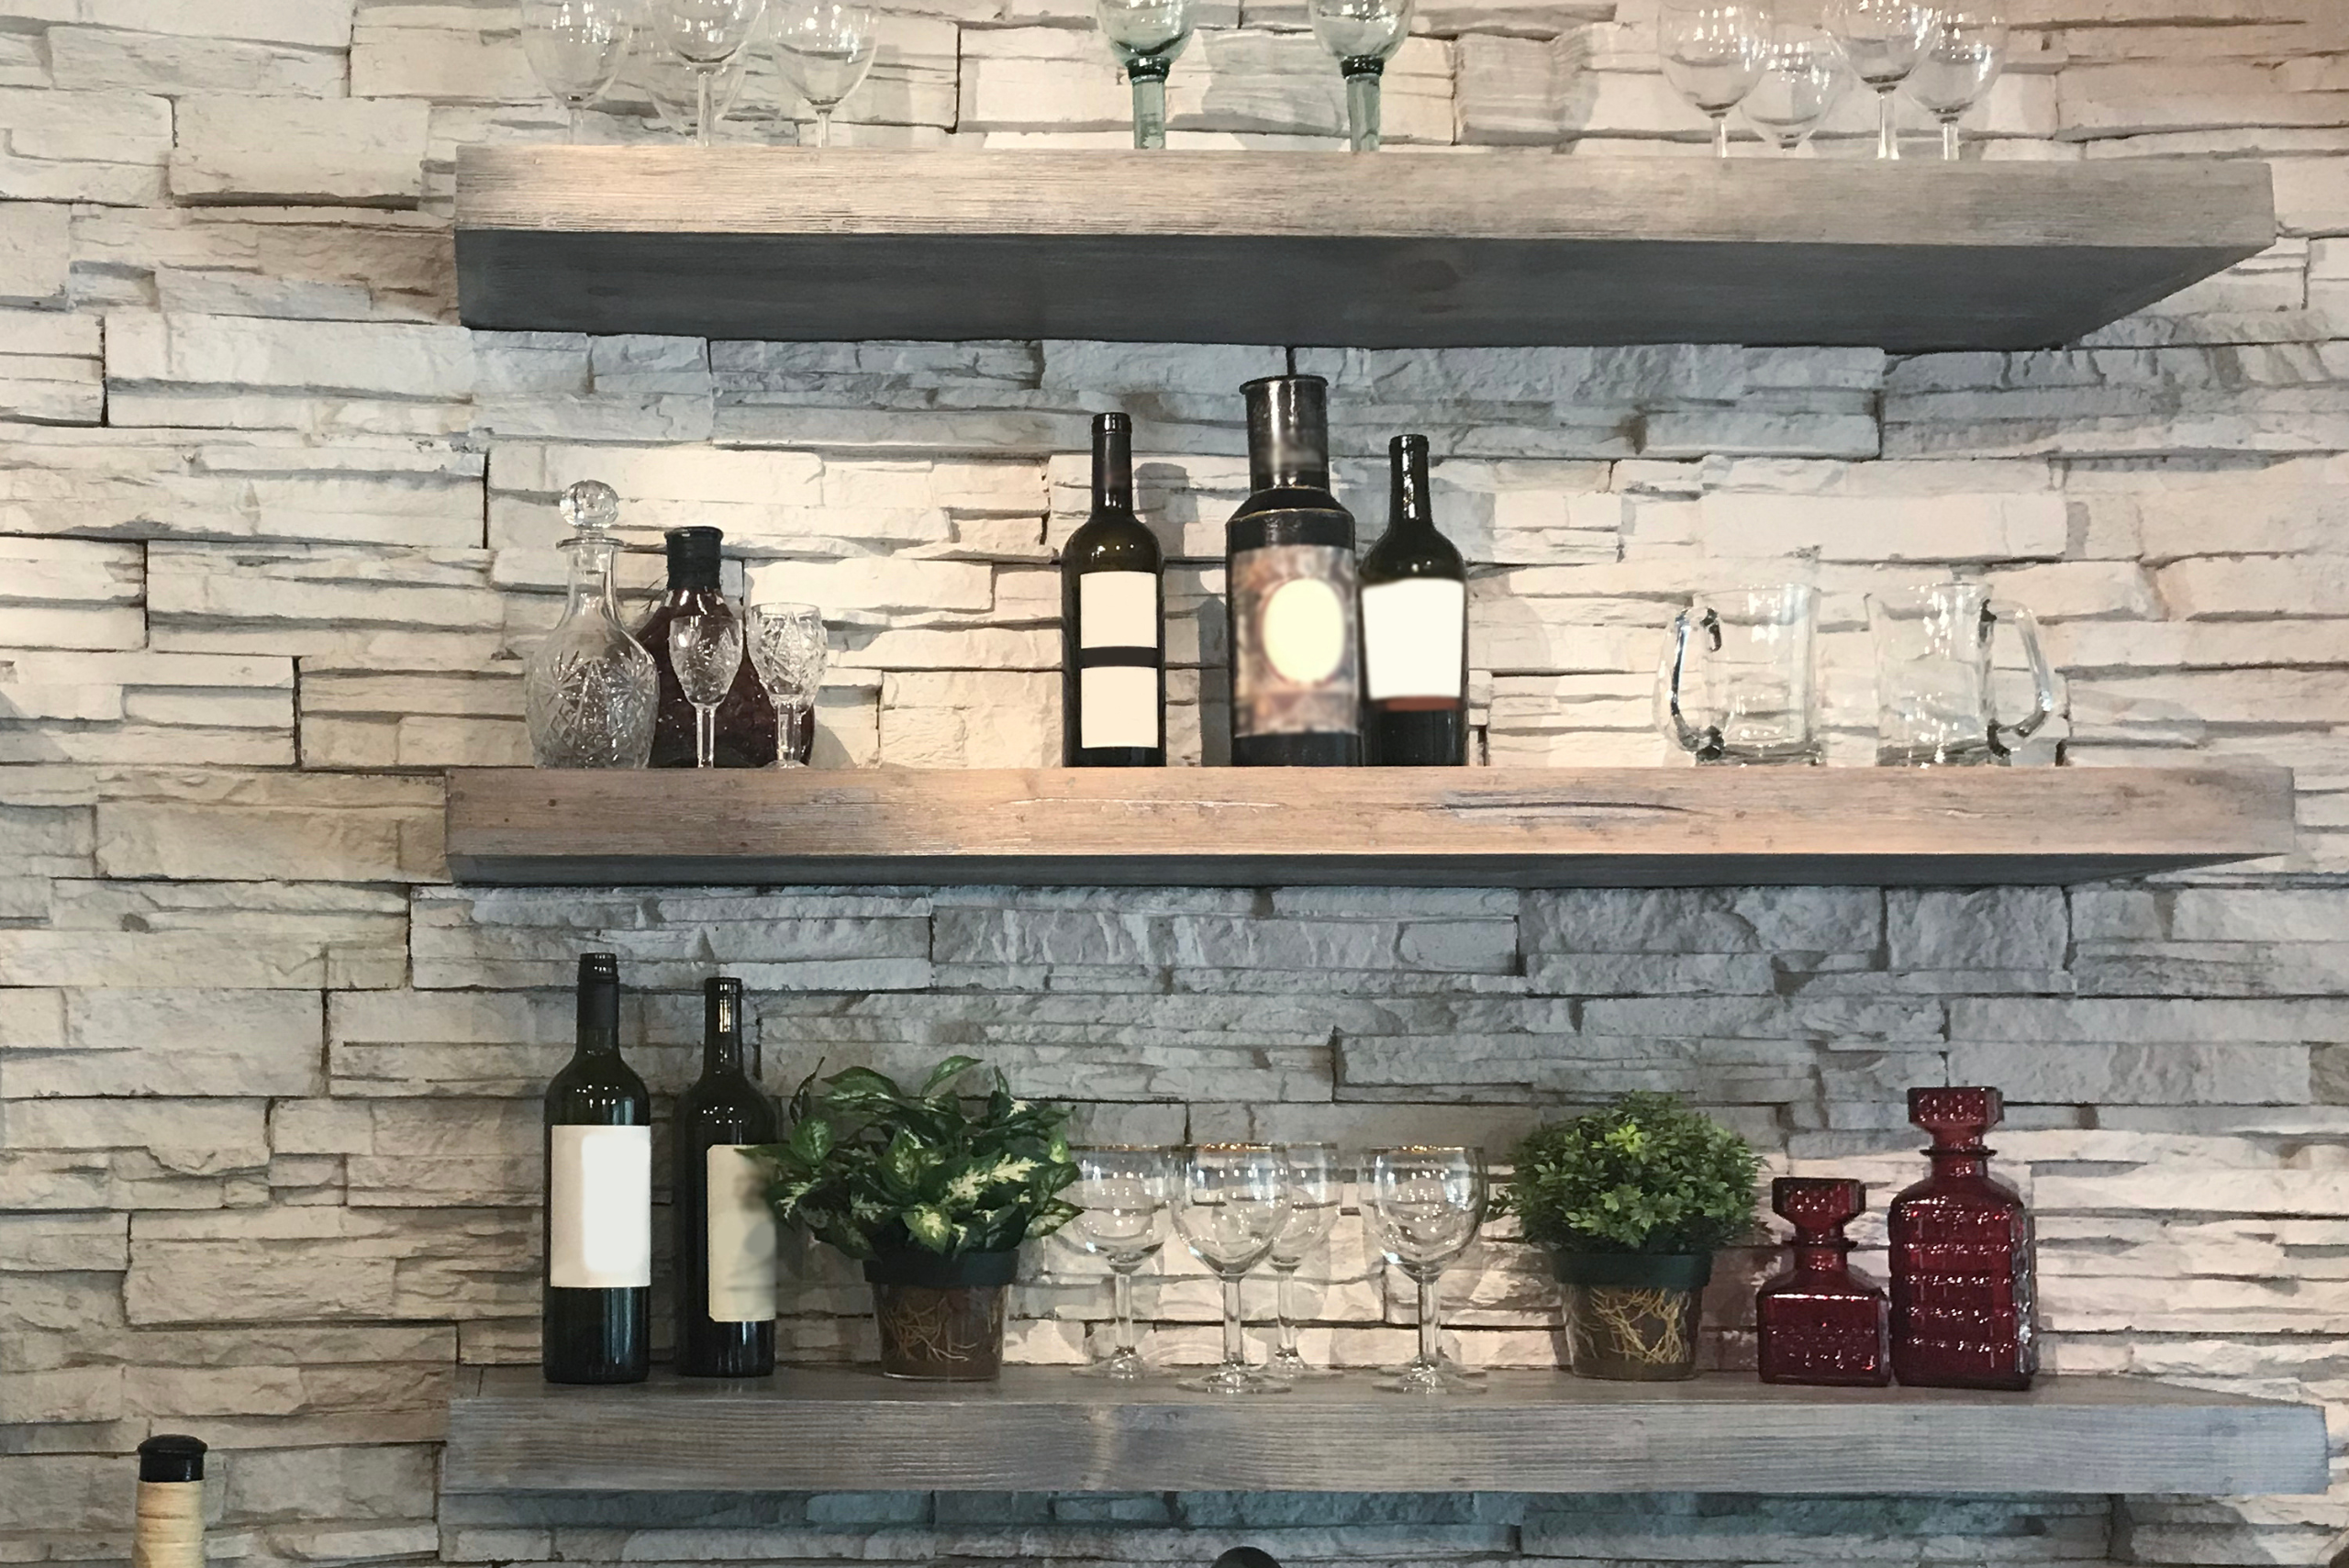 Kitchen floating shelves holding bottles and drinking glasses.